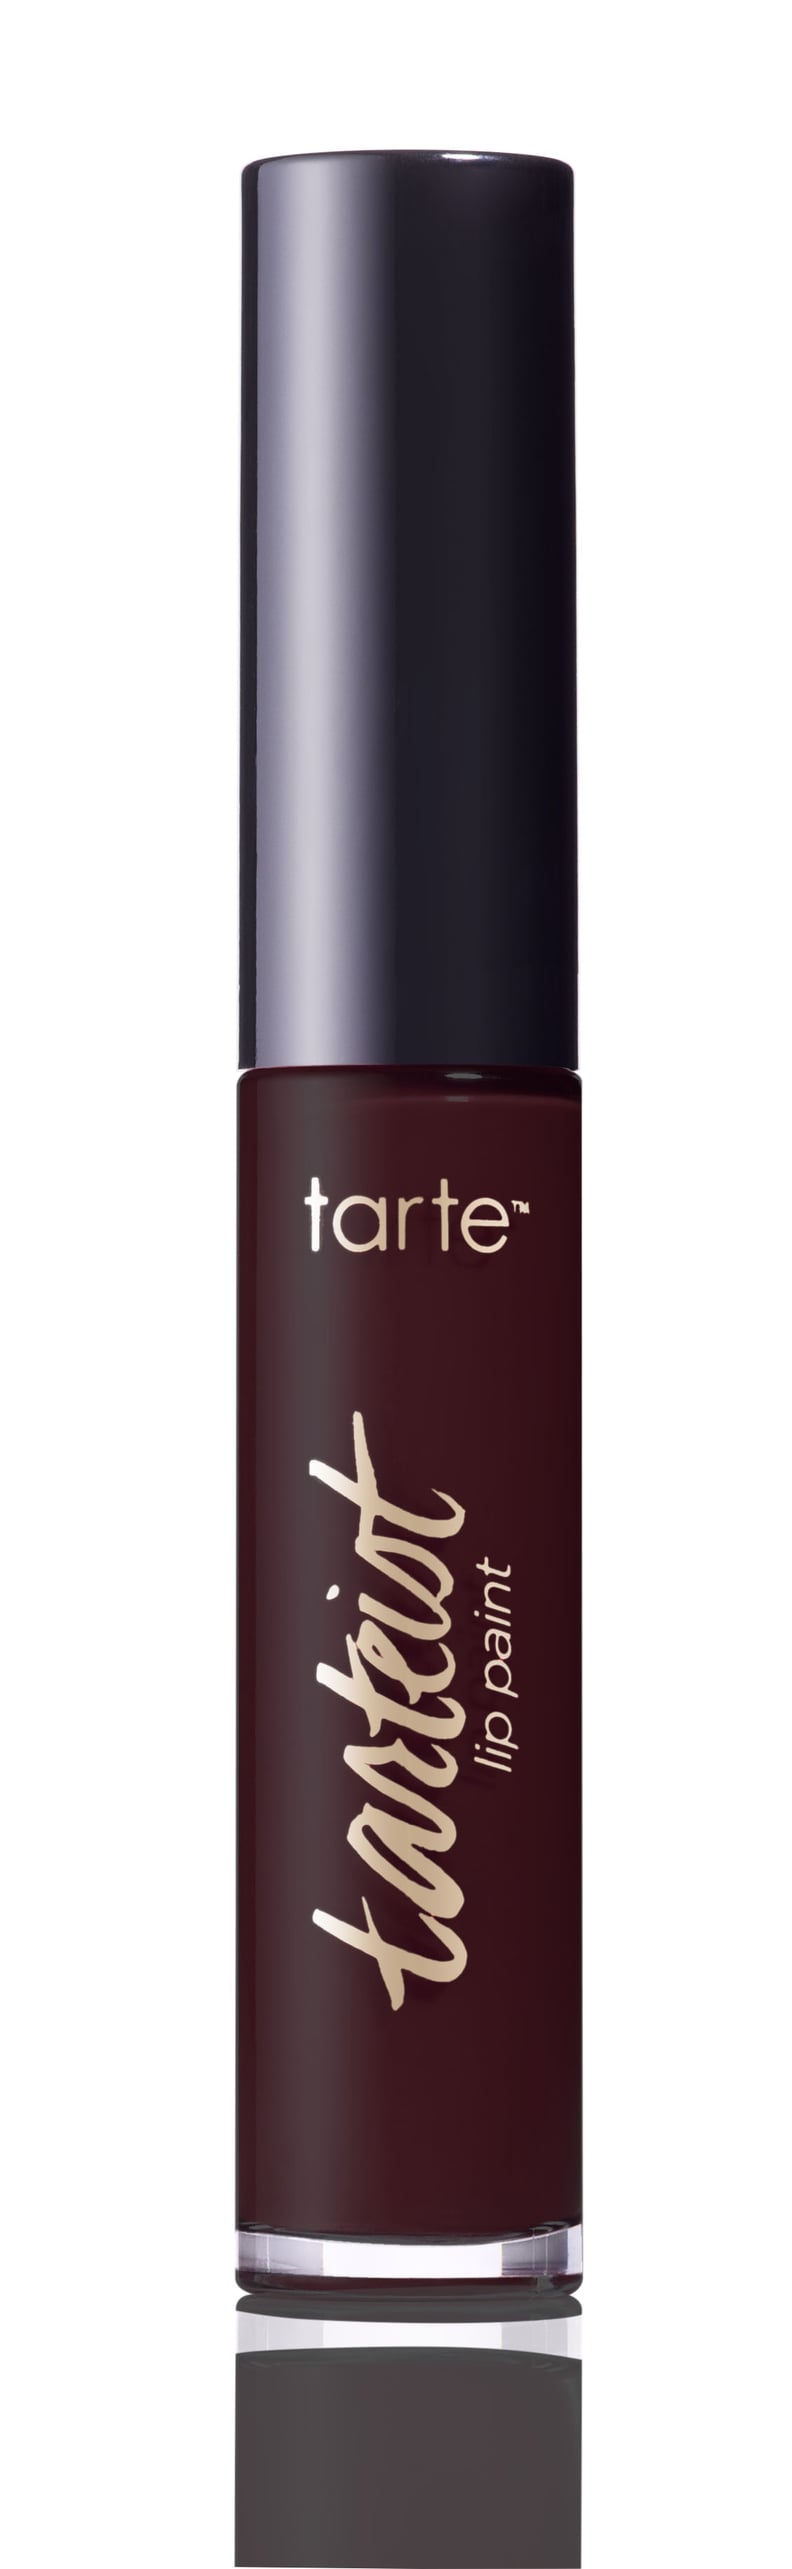 Tarte Cosmetics Tarteist Lip Paint in Frenemy